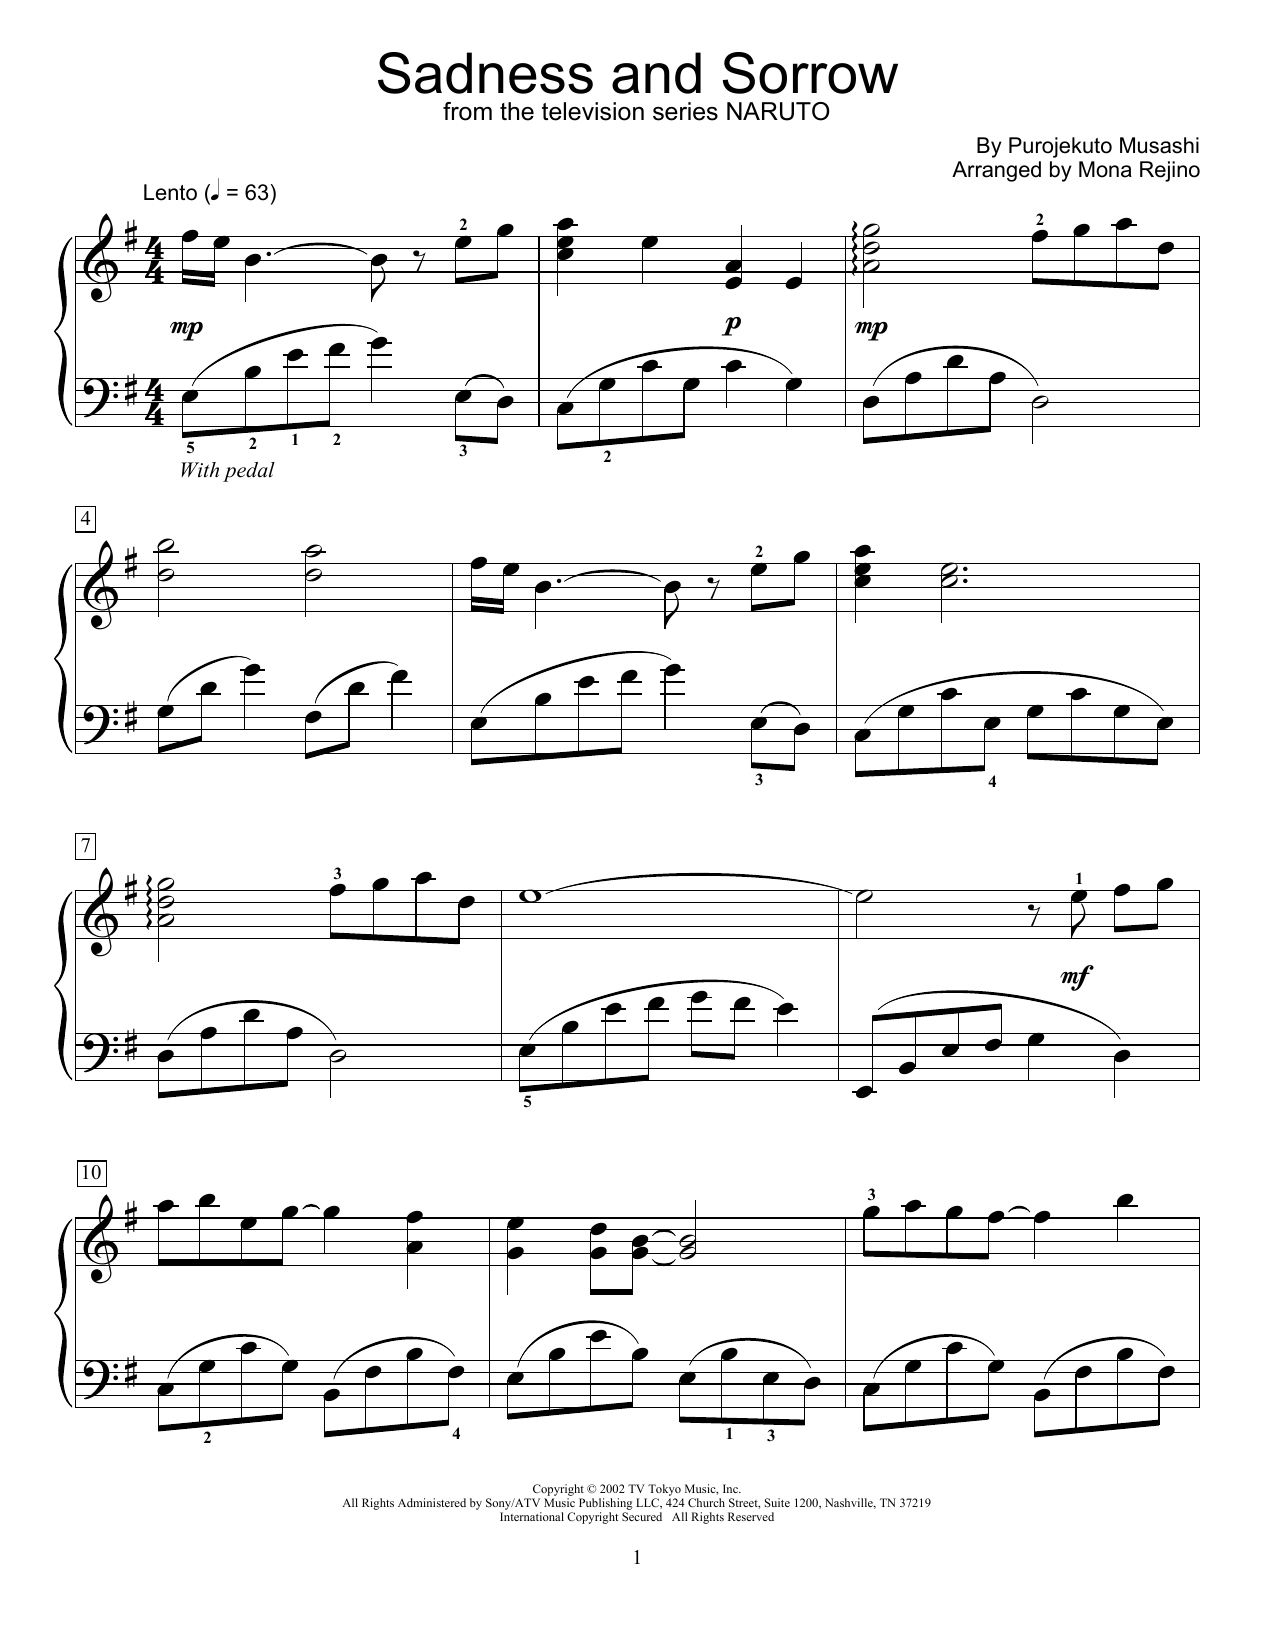 Purojekuto Musashi Sadness And Sorrow (from Naruto) (arr. Mona Rejino) Sheet Music Notes & Chords for Educational Piano - Download or Print PDF